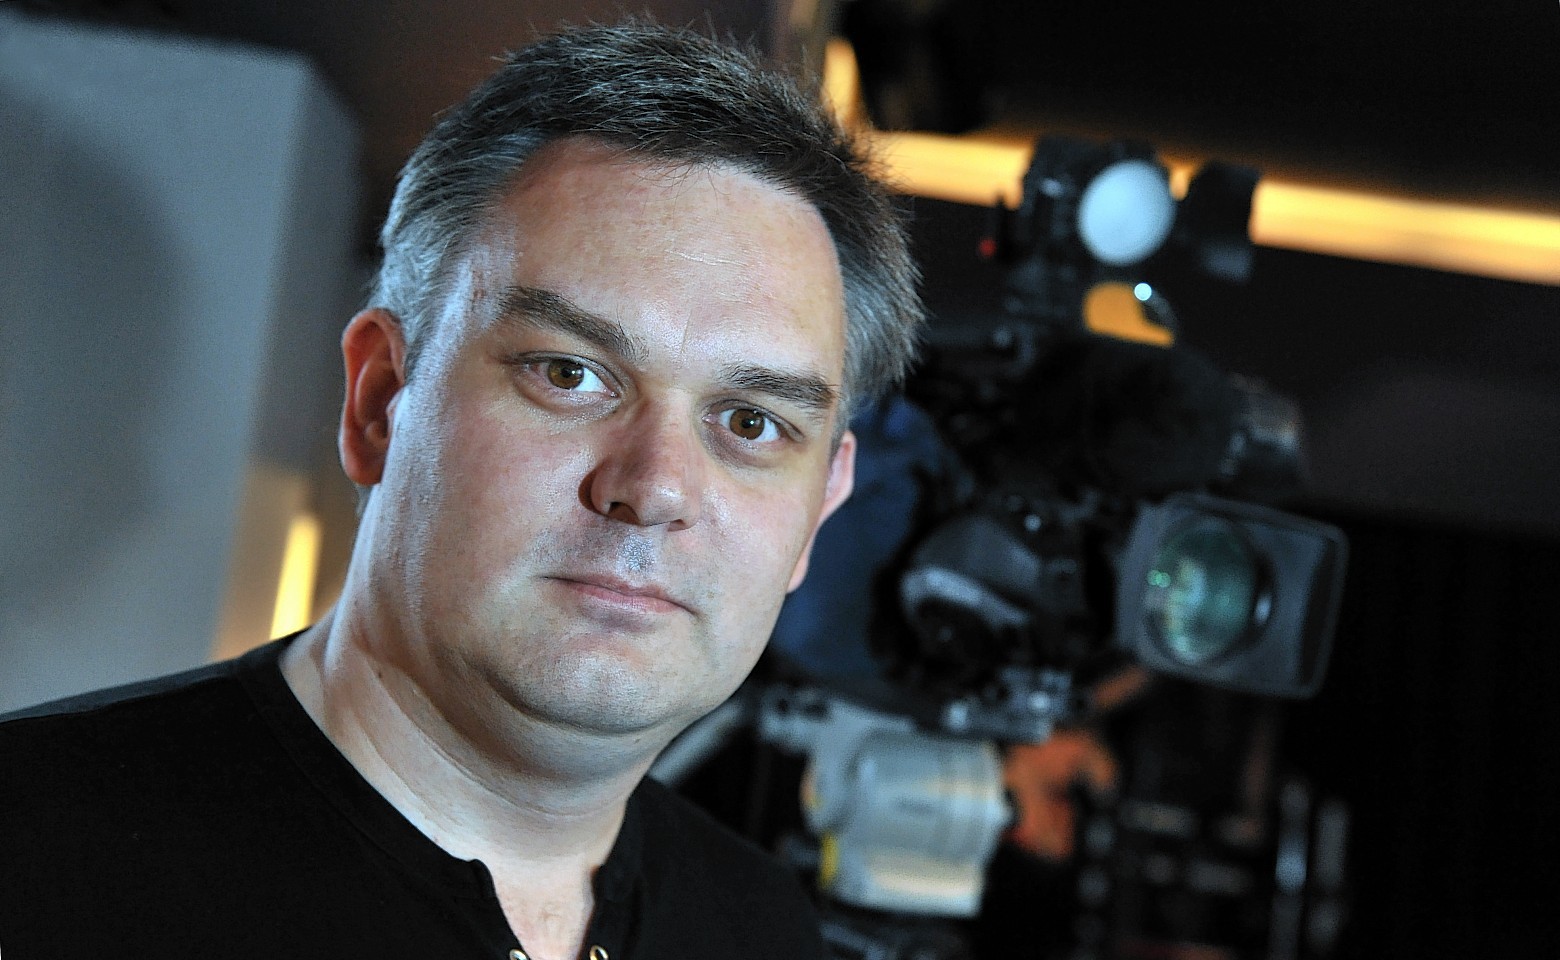 Aberdeen filmmaker Mark Stirton